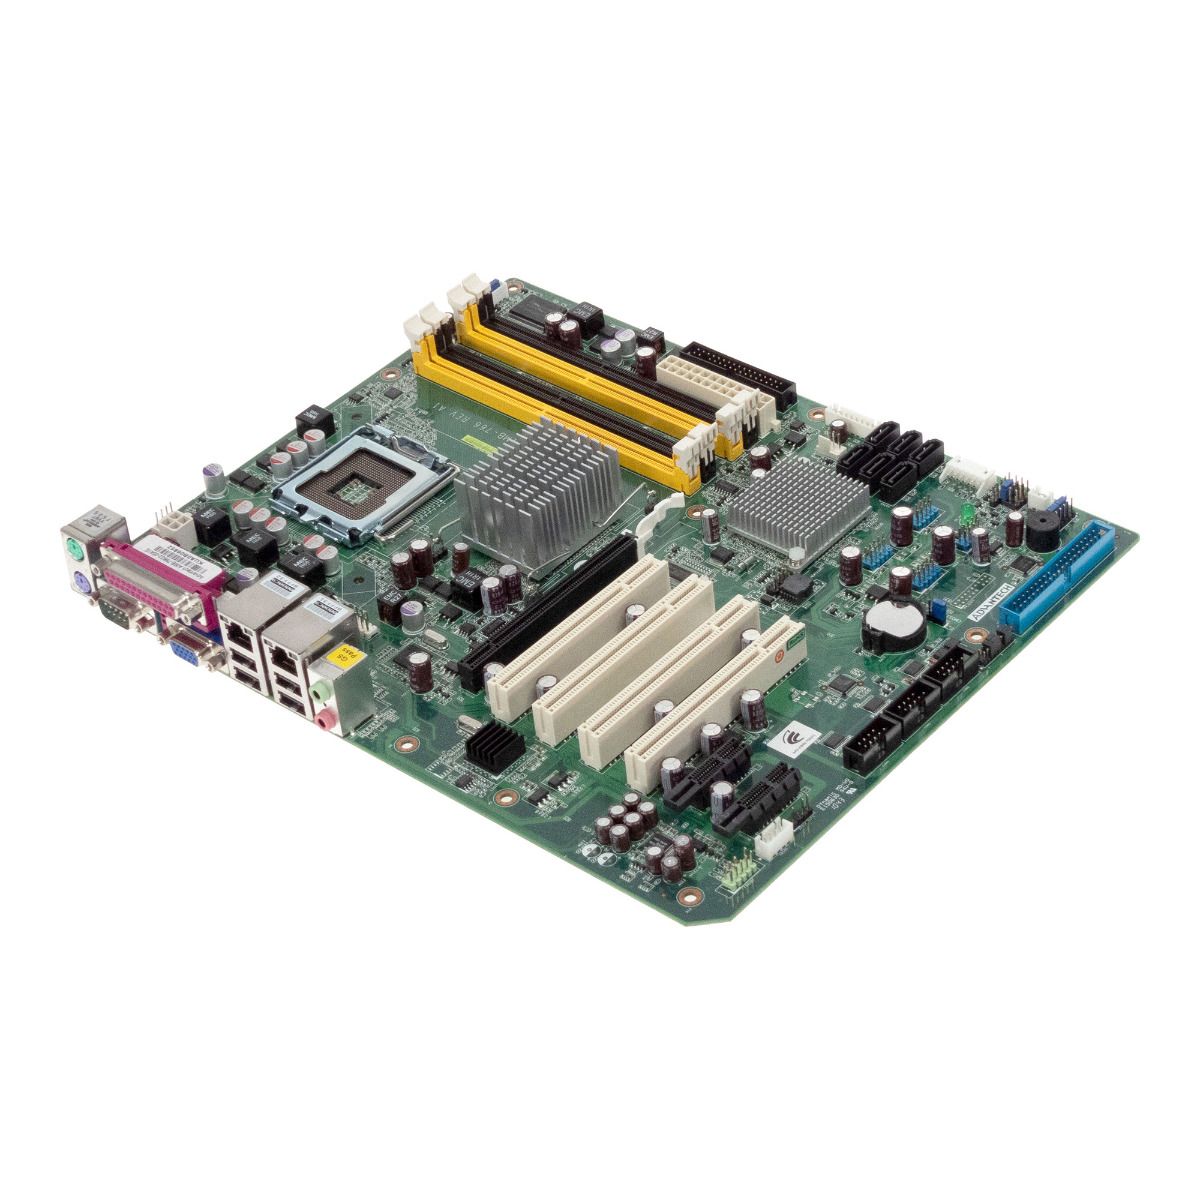 ADVANTECH AIMB-766 REV.A2 LGA775 DDR2 PCIe PCI ATX